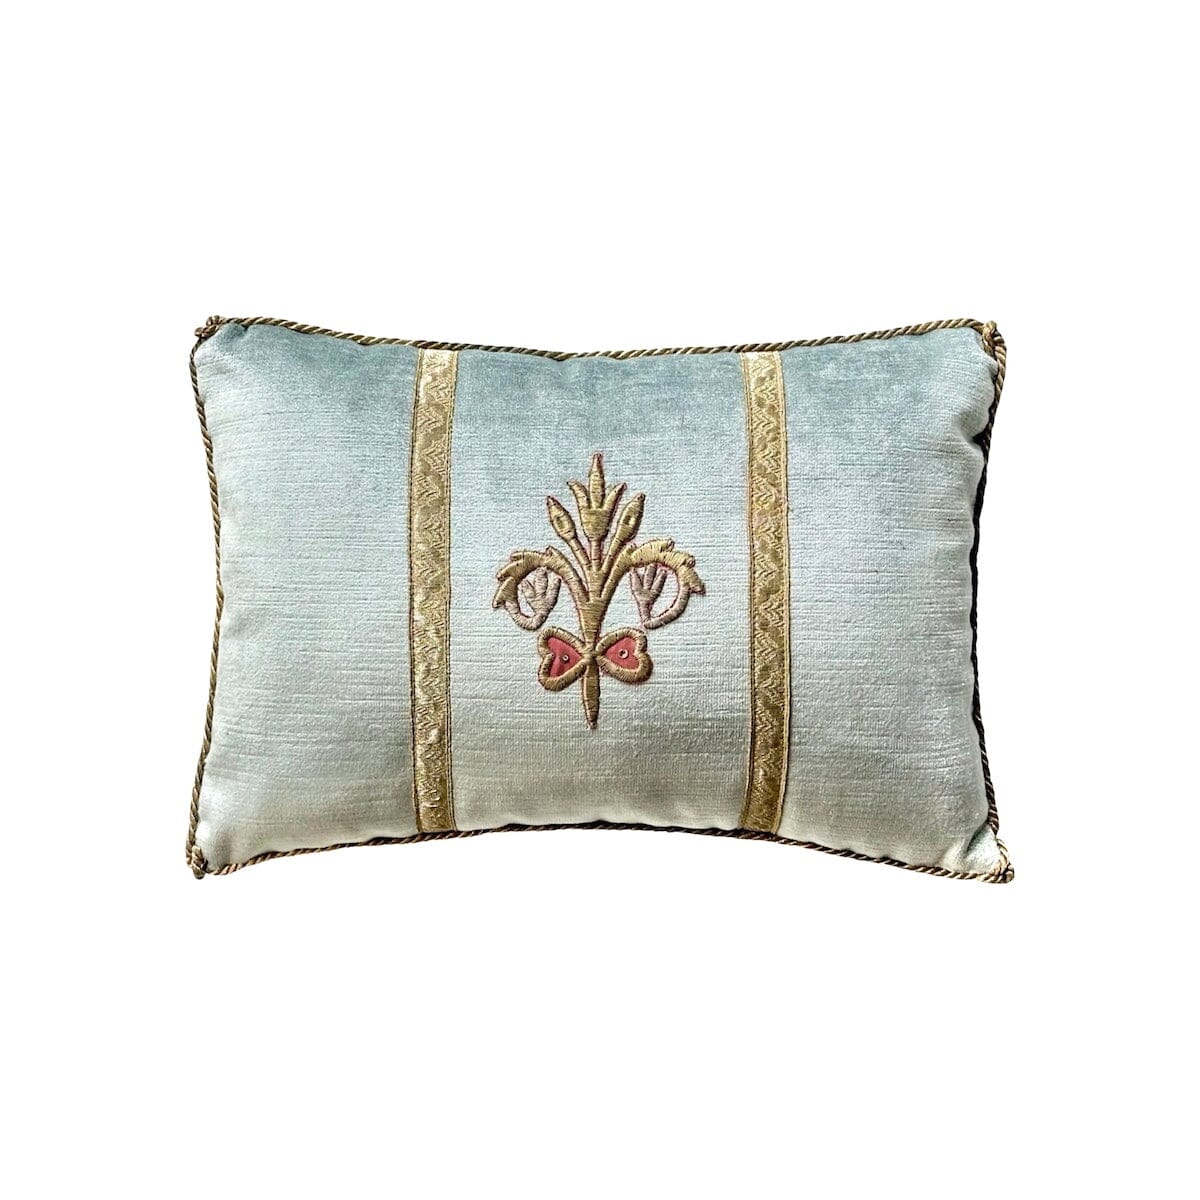 Antique Ottoman Empire Raised Silver and Gold Metallic Embroidery (#E050624A&B | 9 x 13") New Pillows B. Viz Design 